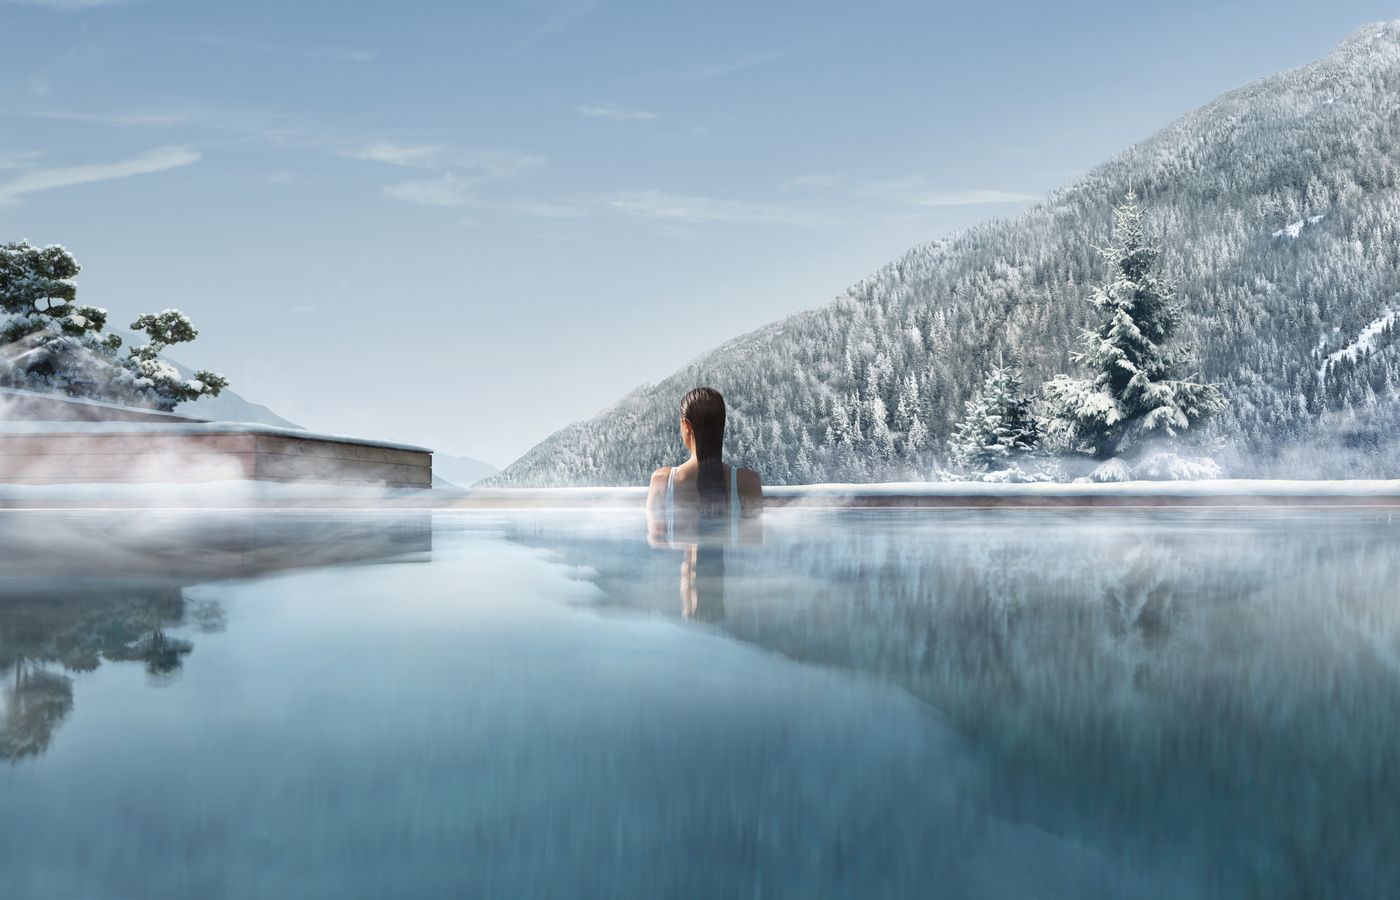 Trip Polen - FitReisen - Lefay Resort & Spa Dolomiti in Pinzolo buche jetzt Deinen Wellness & Beauty Urlaub im Lefay Resort & Spa Dolomiti in der Region Südtirol, in Italien günstig bei uns!